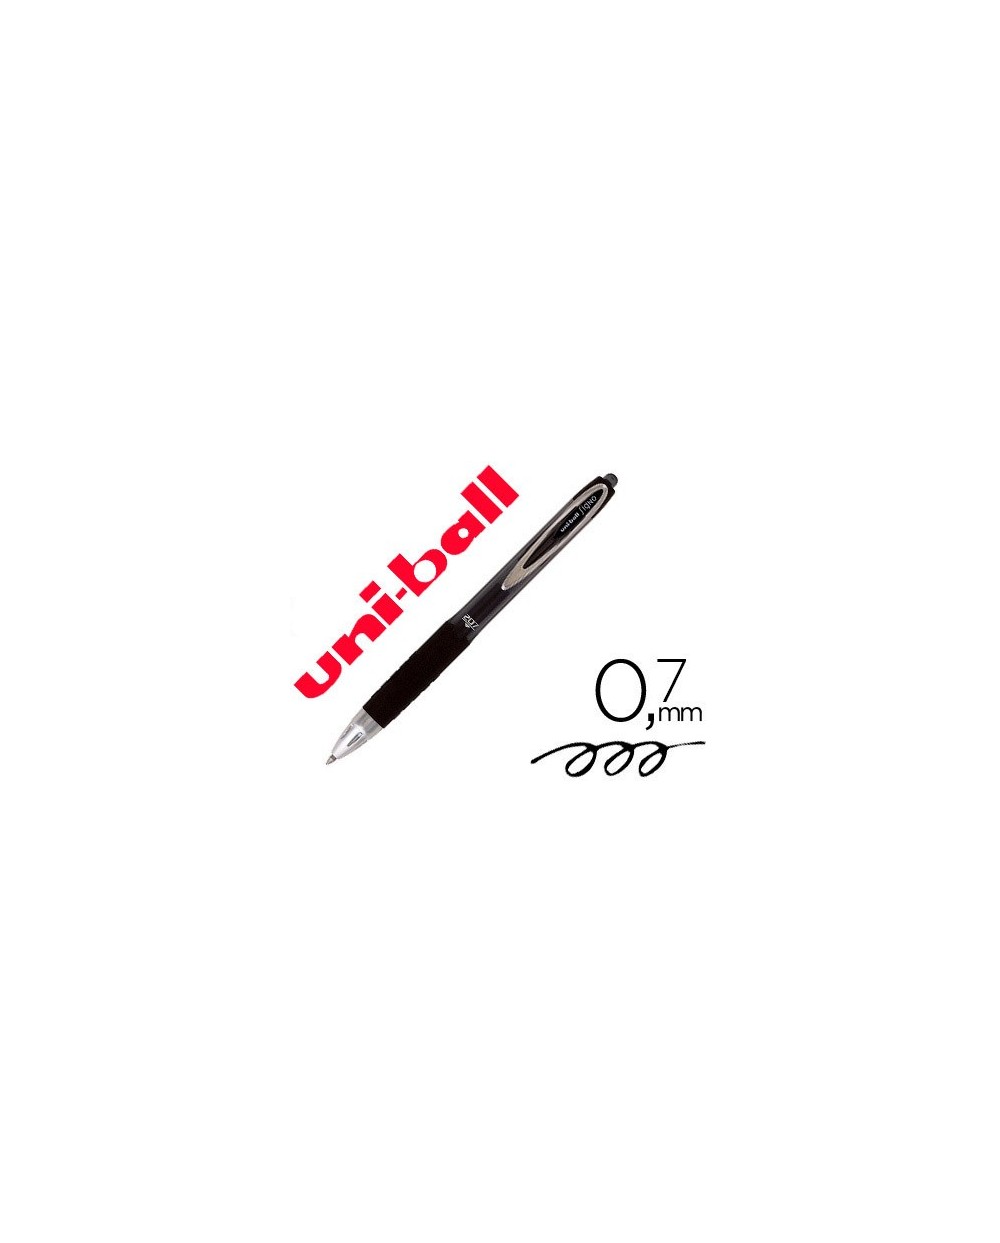 Boligrafo uni ball roller umn 207 retractil 07 mm color negro